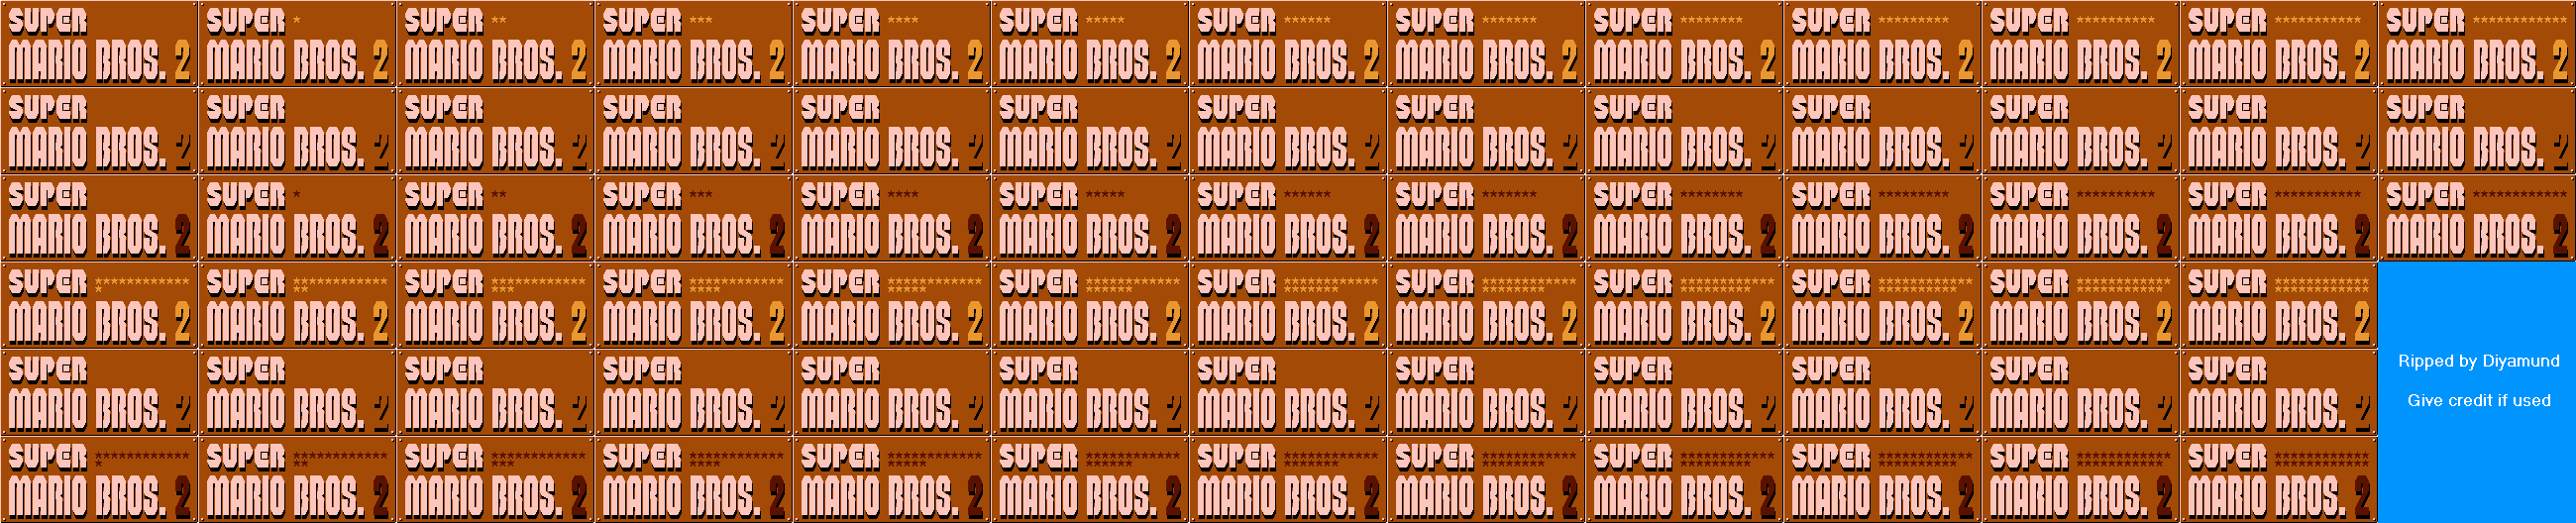 Super Mario Bros. 2 / The Lost Levels (JPN) - Logo